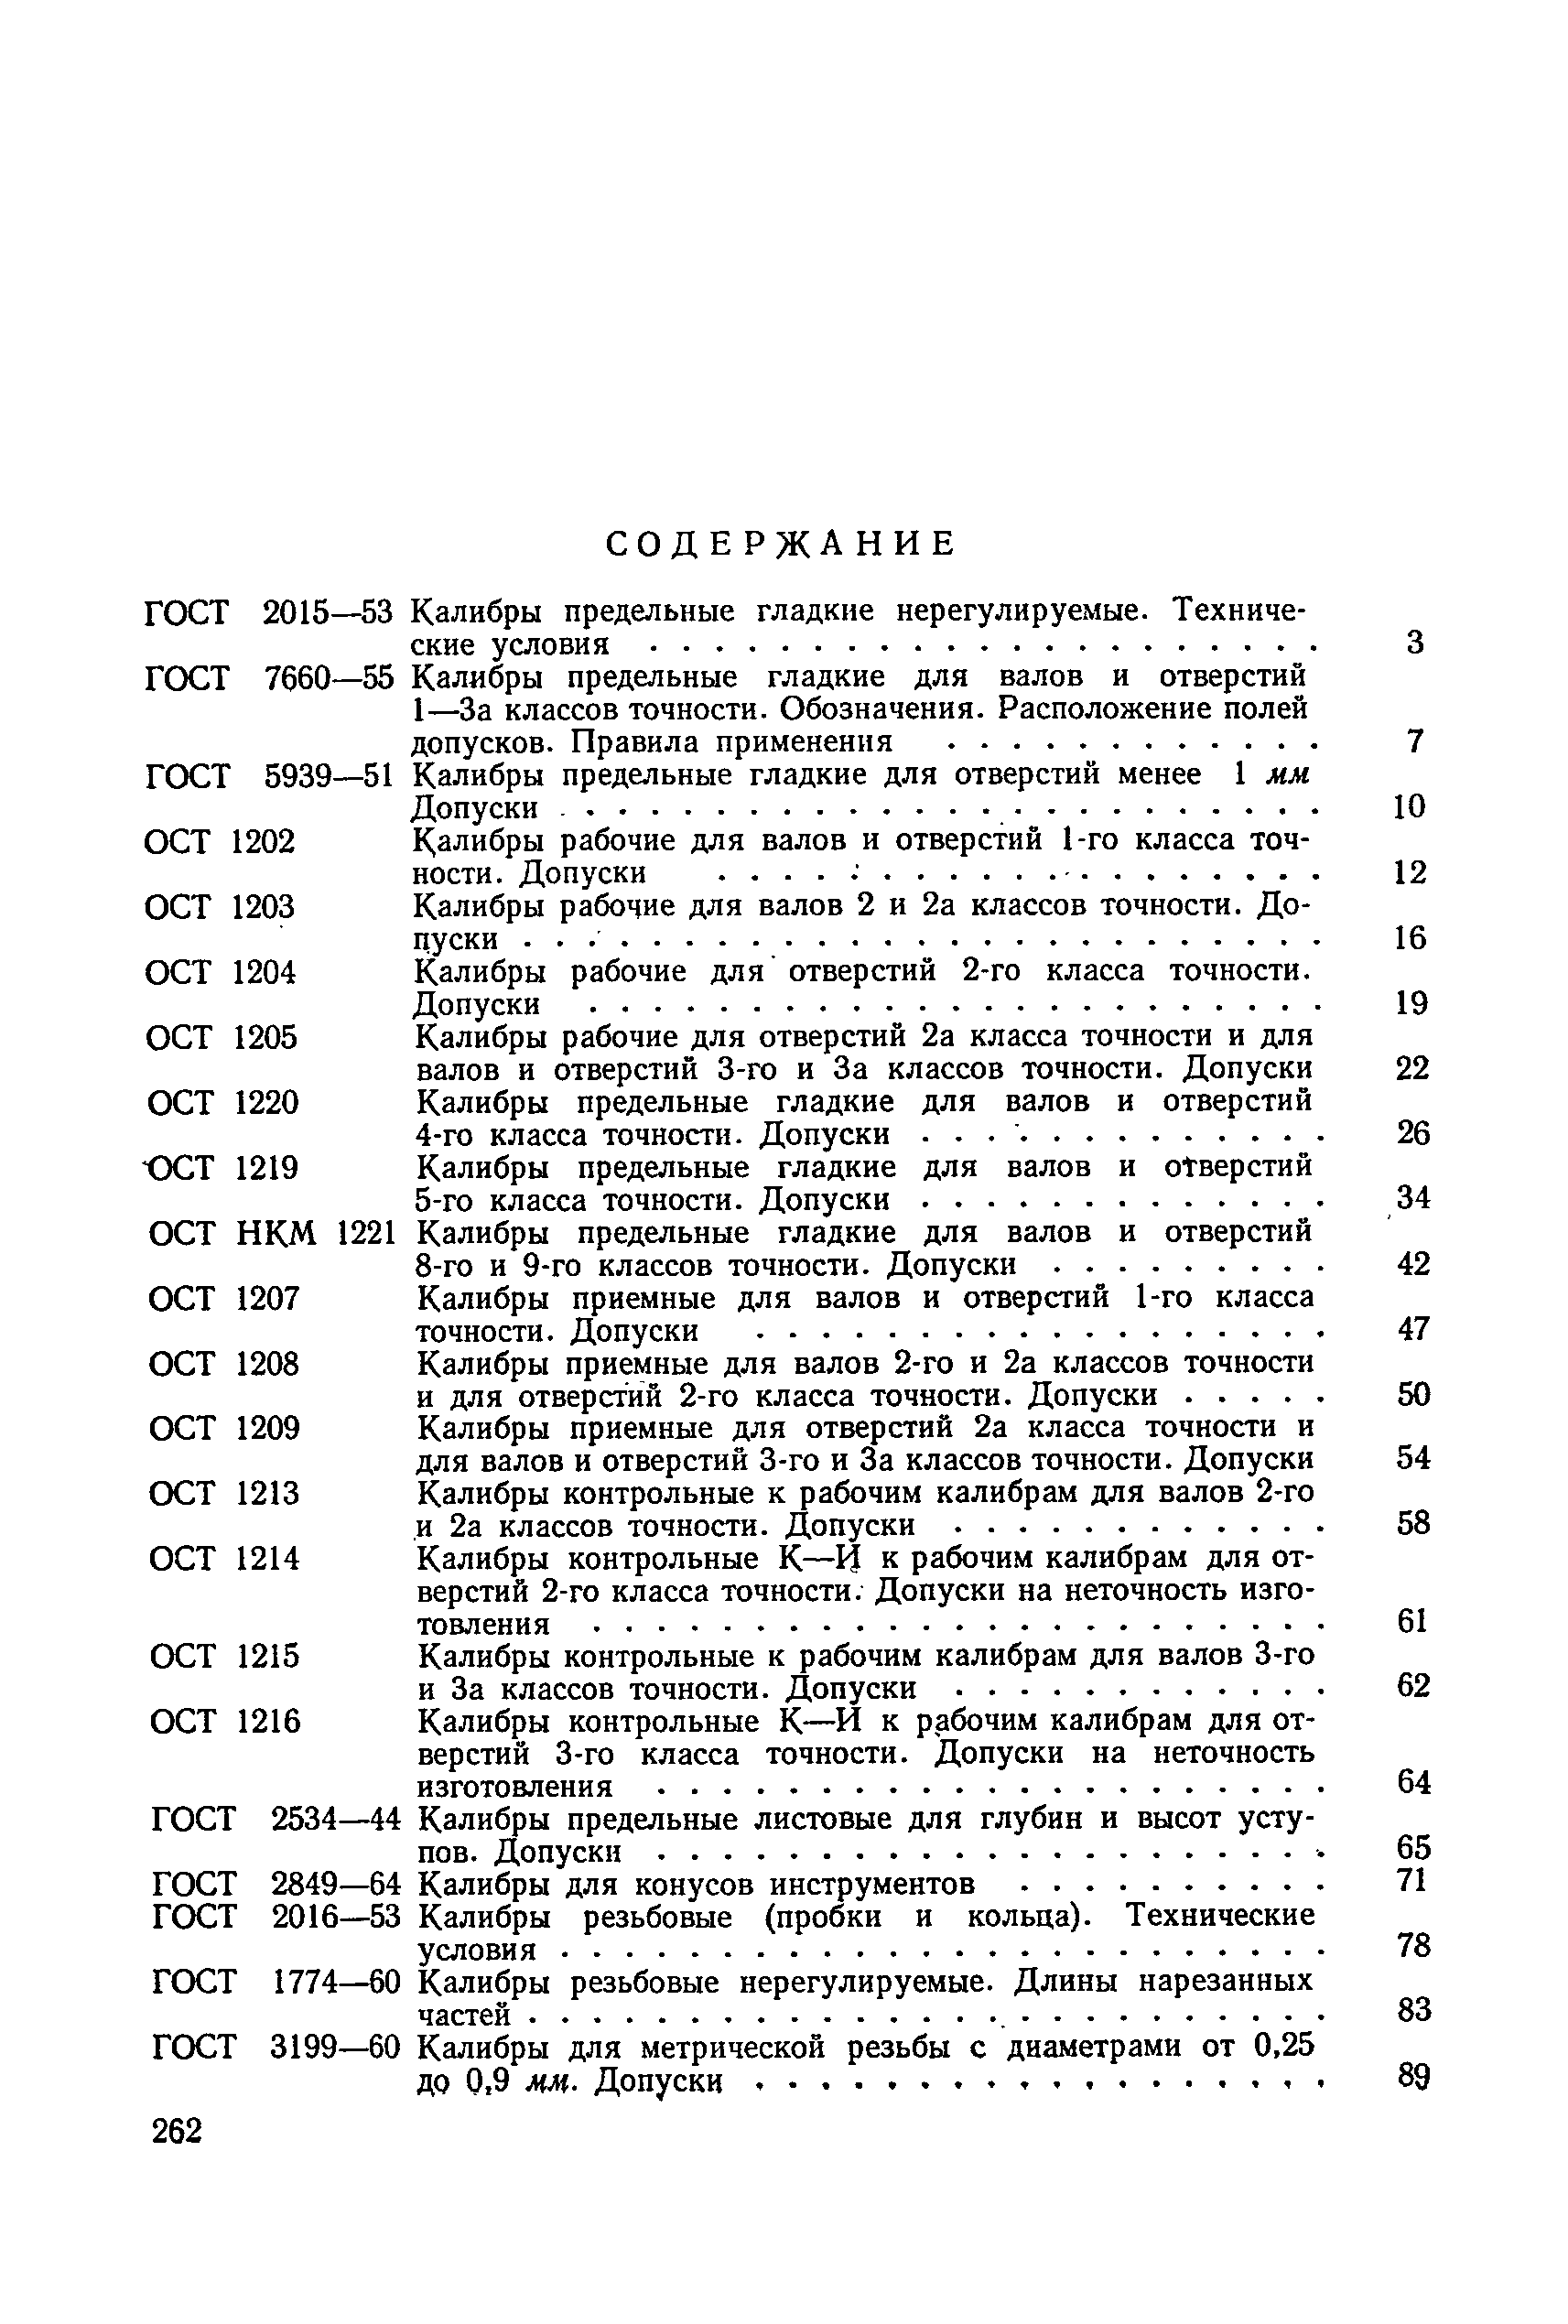 ГОСТ 11953-66